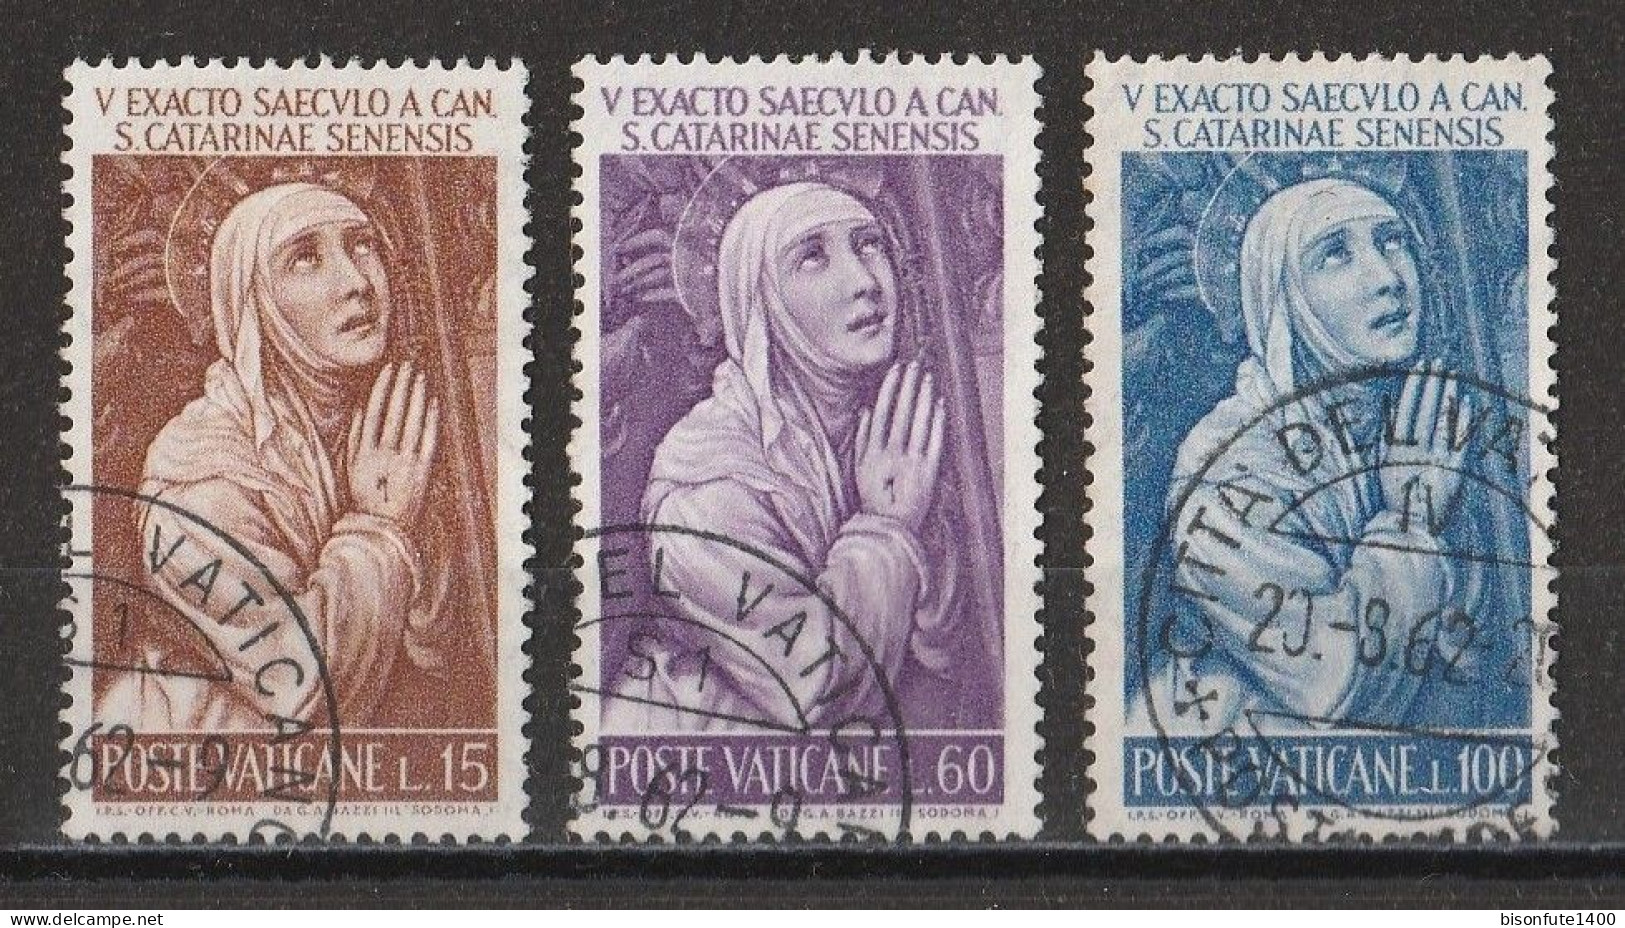 Vatican 1962 : Timbres Yvert & Tellier N° 344 - 348 - 349 - 350 - 351 - 352 - 353 - 354 Et 355 Oblitérés. - Used Stamps